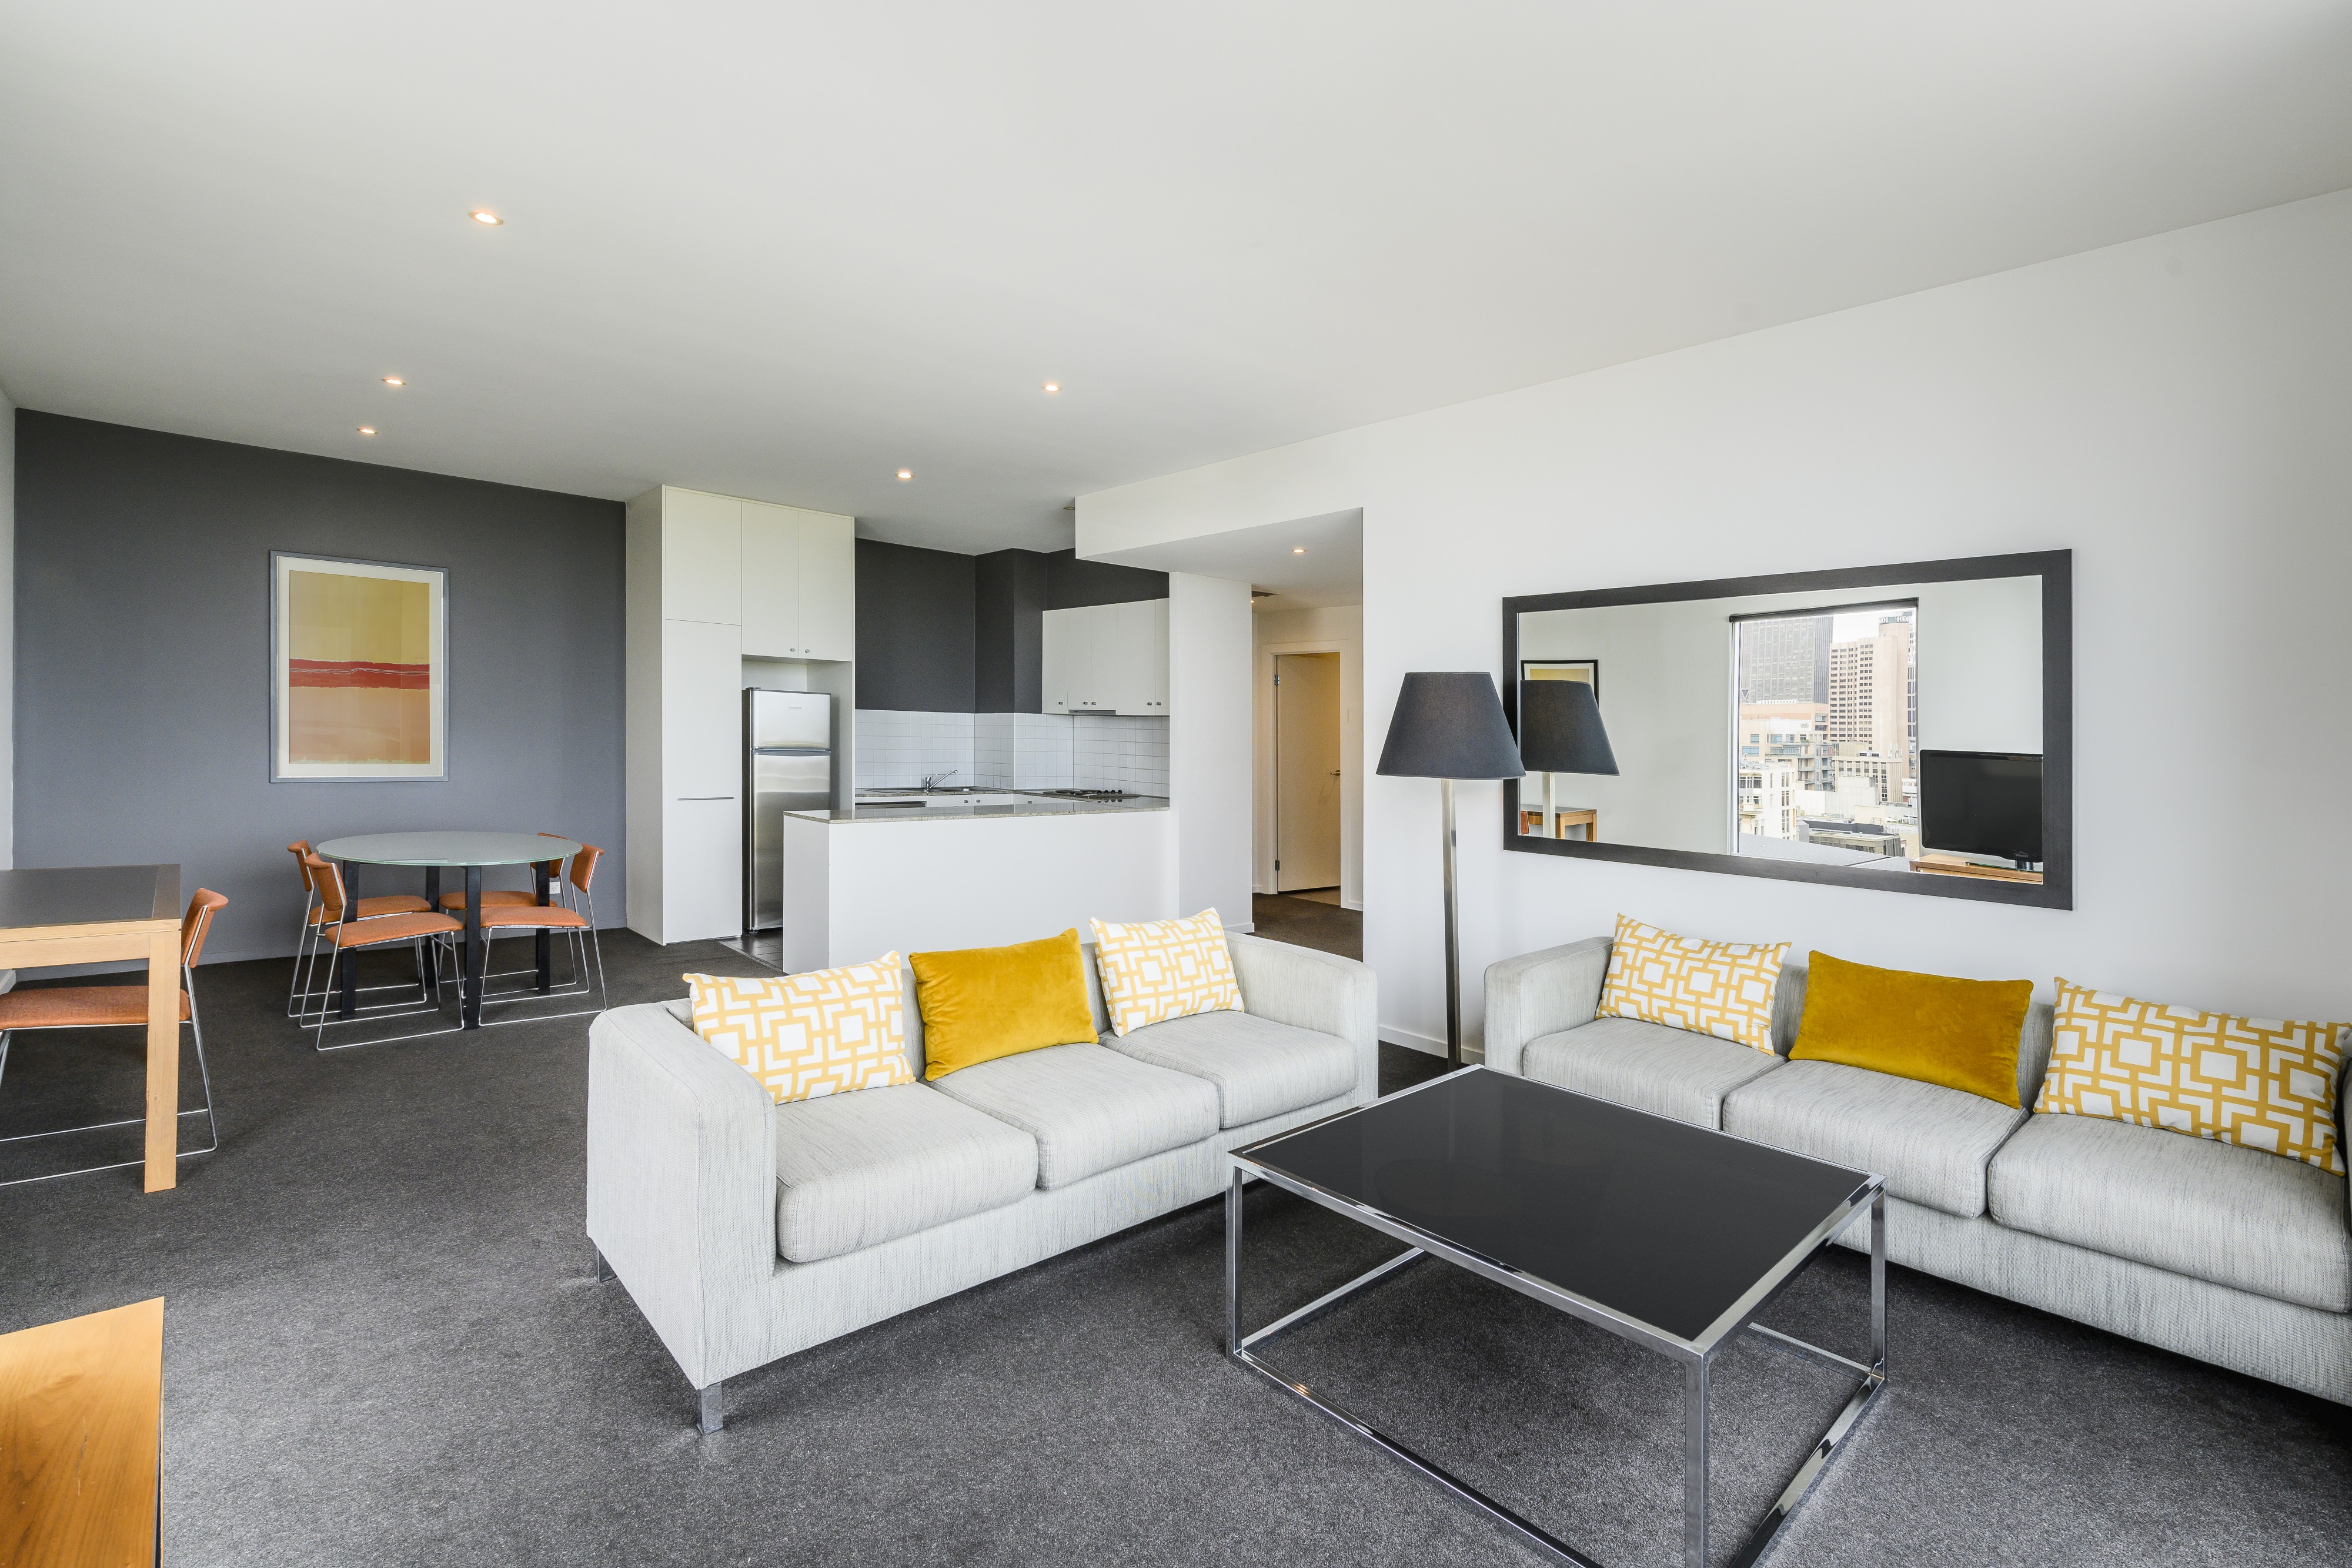 Adina Apartment Hotel Melbourne, Flinders Street | 88 Flinders Street, Melbourne, Victoria 3000 | +61 3 8663 0000